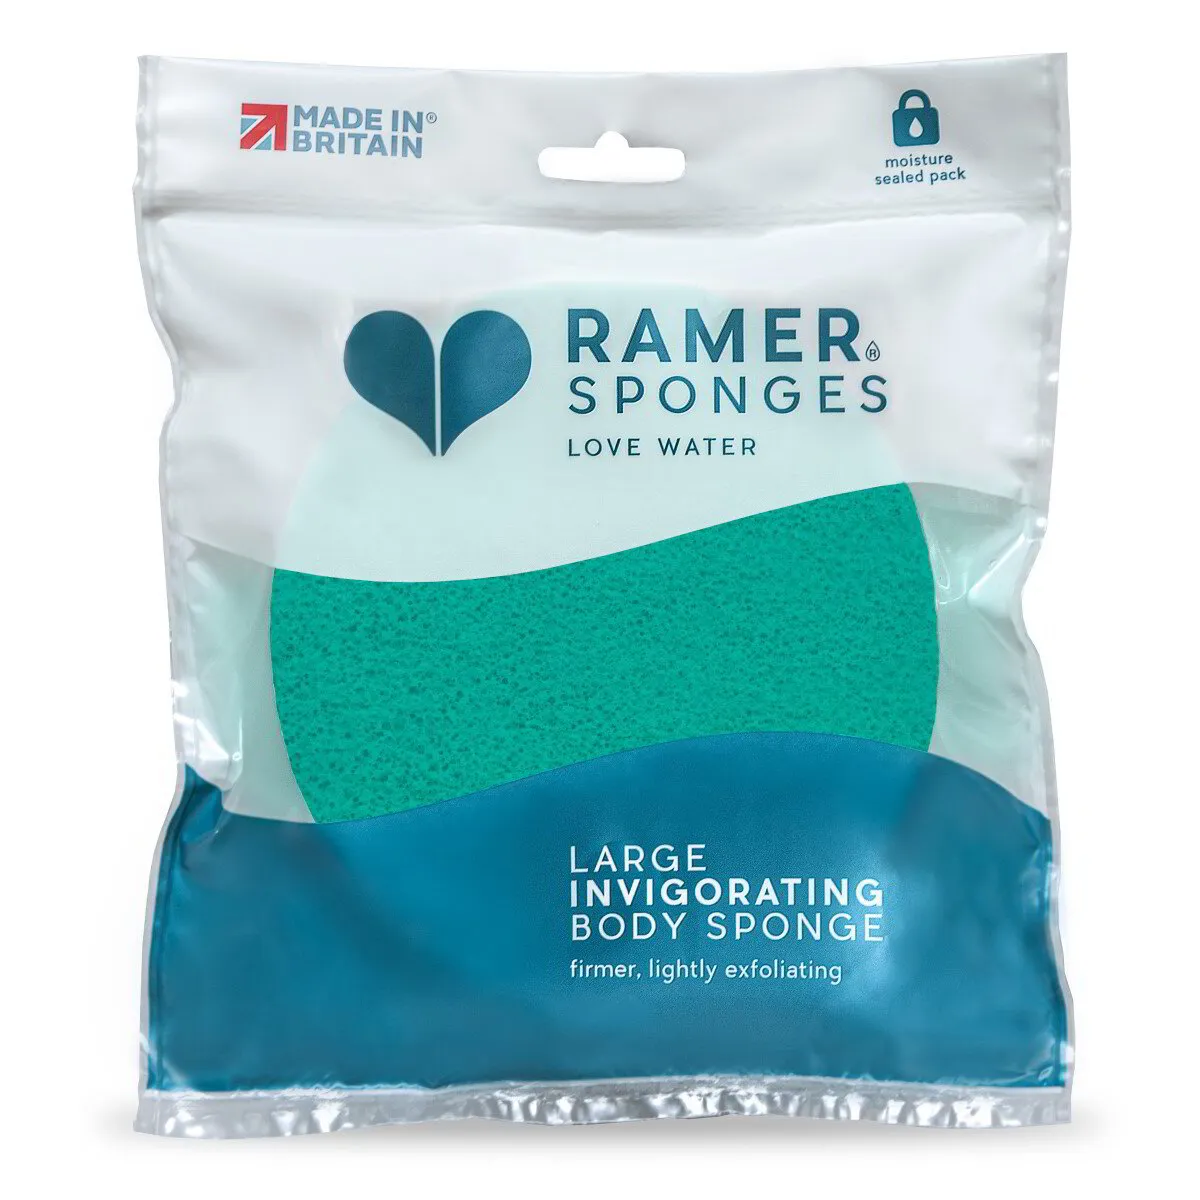 Ramer Large Invigorating Body Sponge